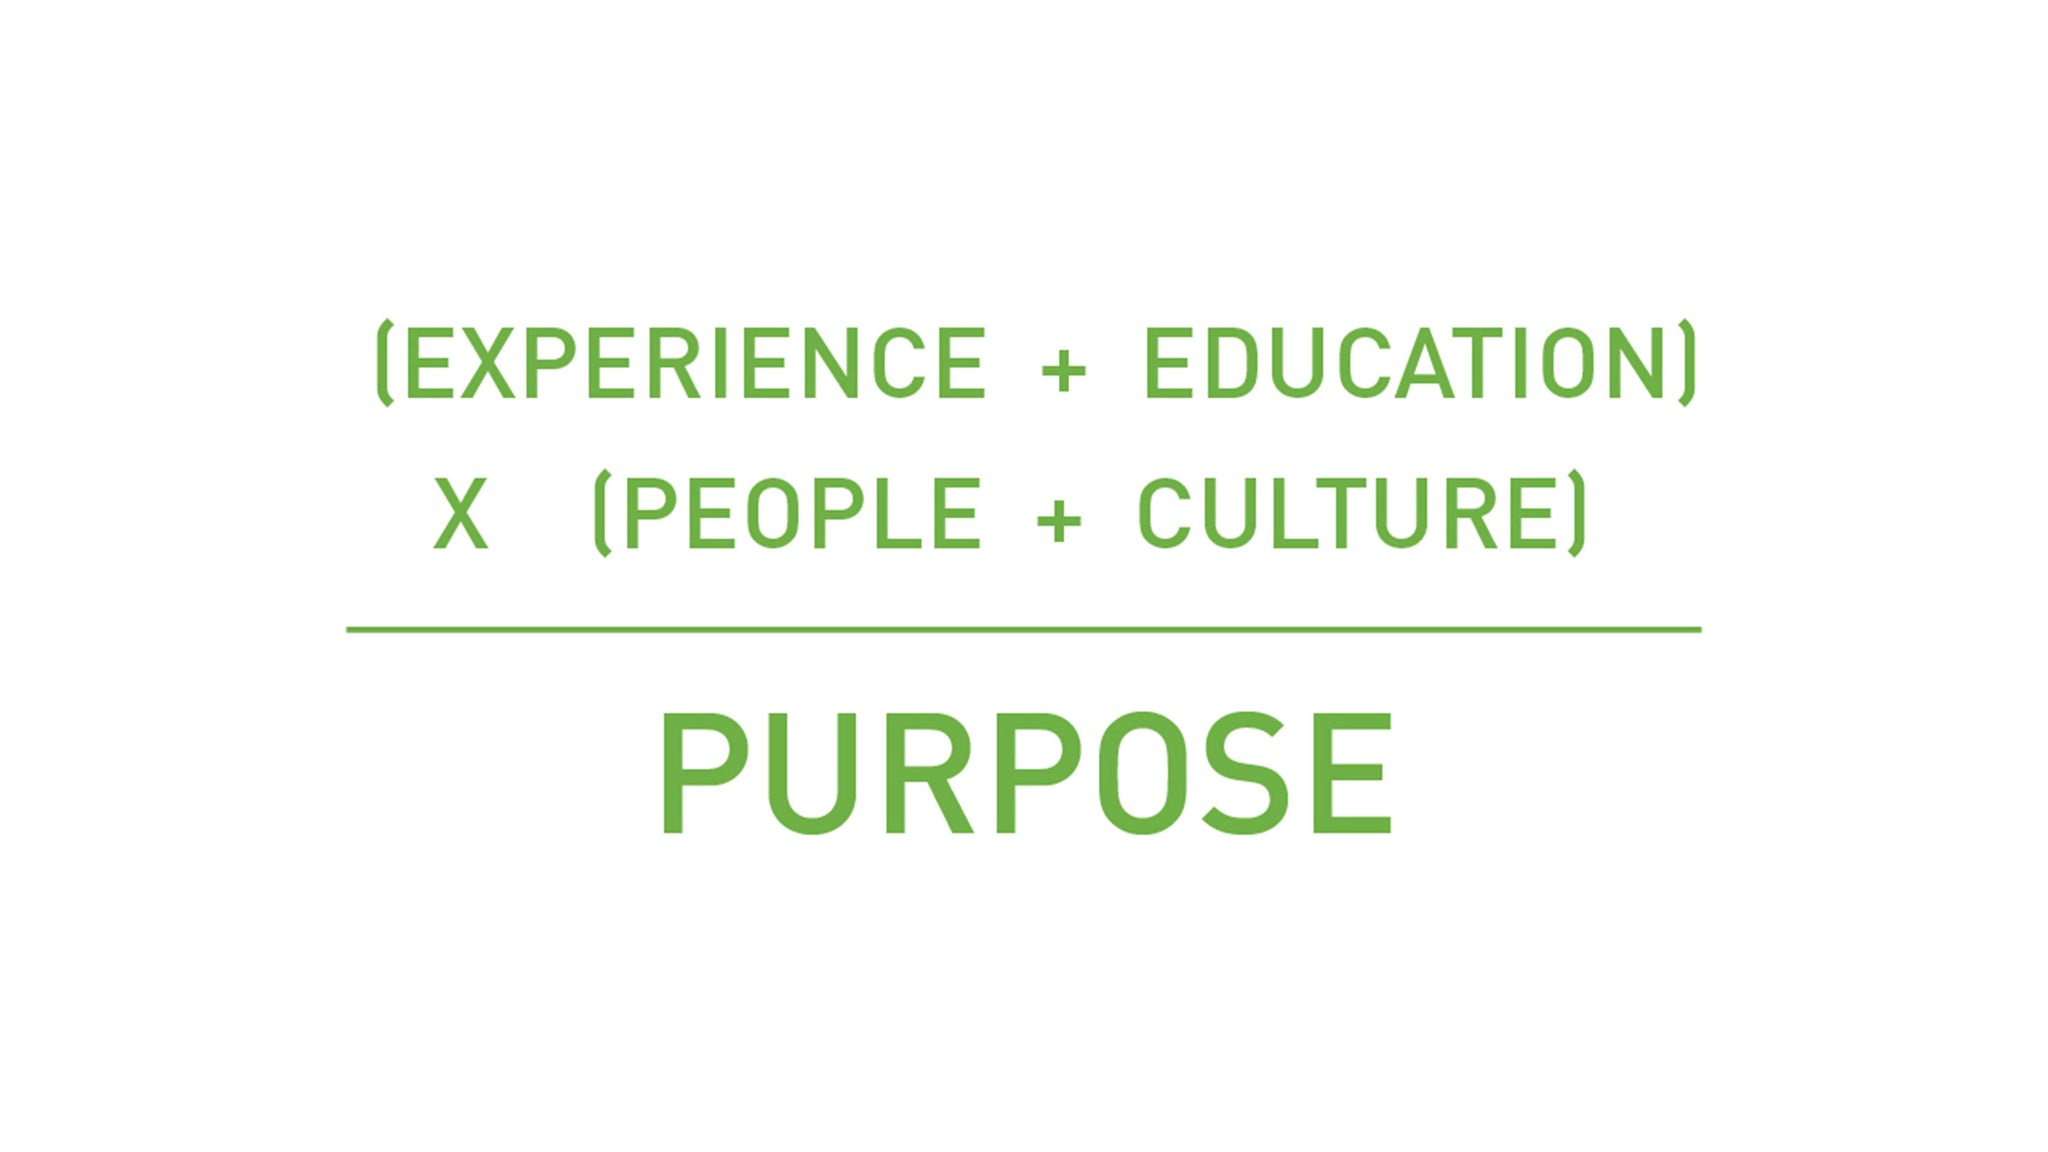 Purpose equation: Experience + Education X People + Culture = Purpose.